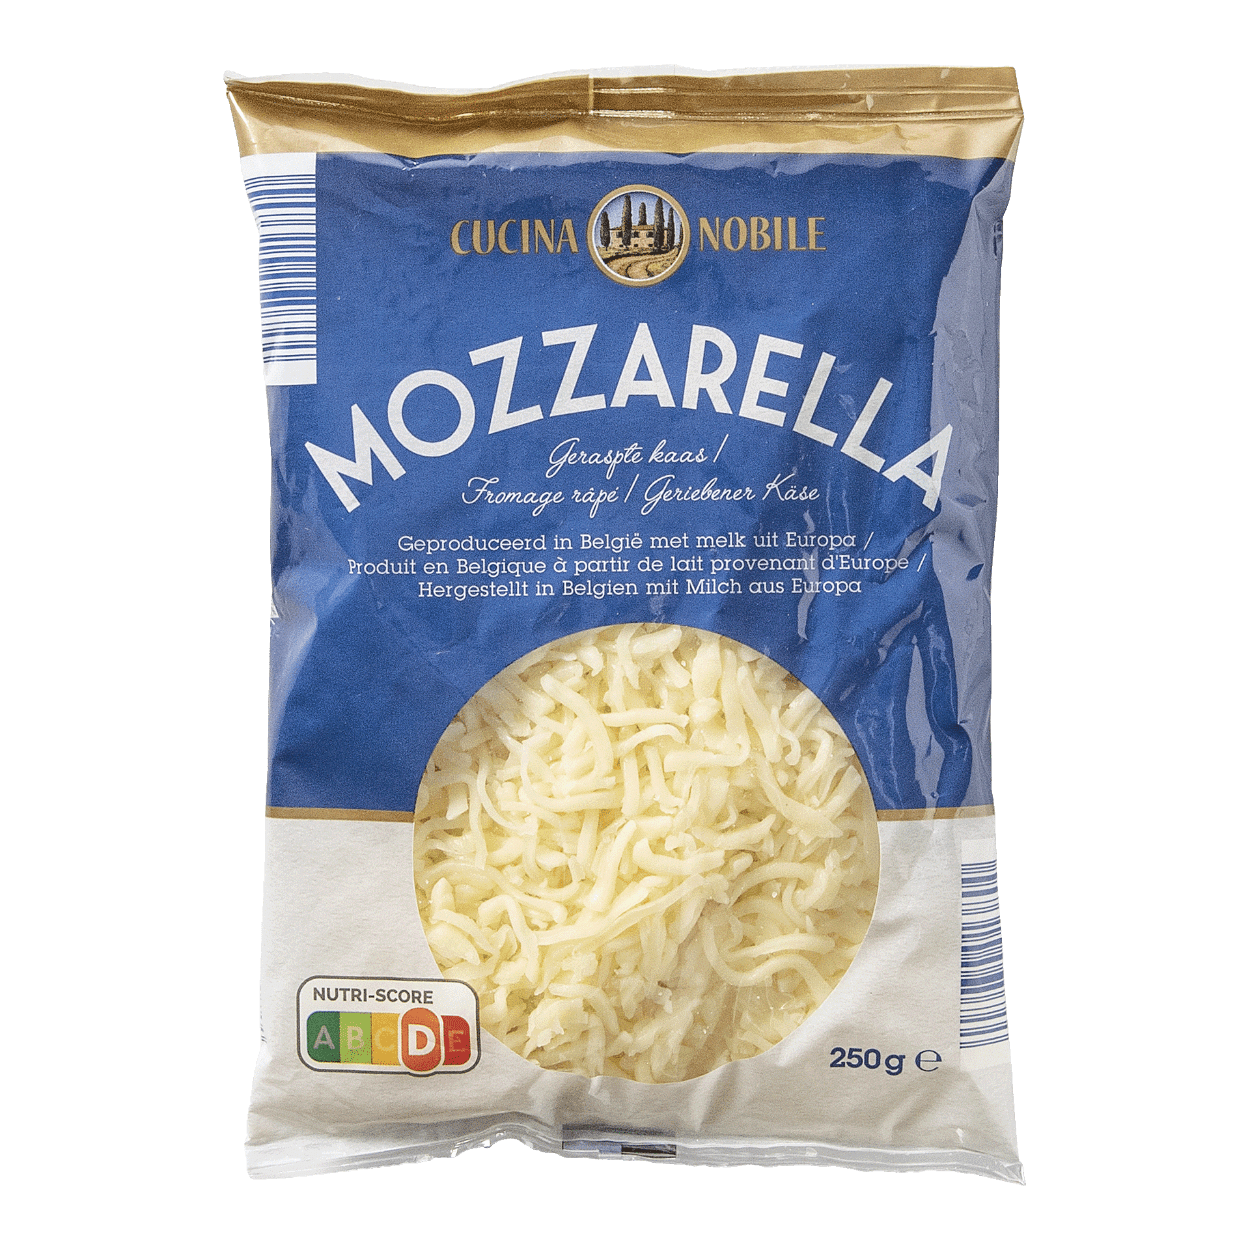 CUCINA NOBILE® Mozzarella râpée bon marché chez ALDI